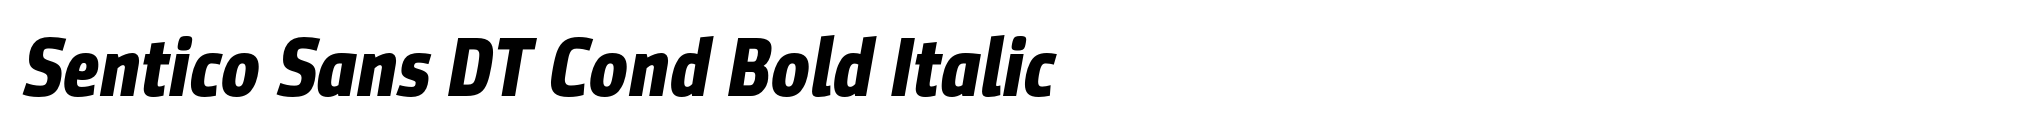 Sentico Sans DT Cond Bold Italic image